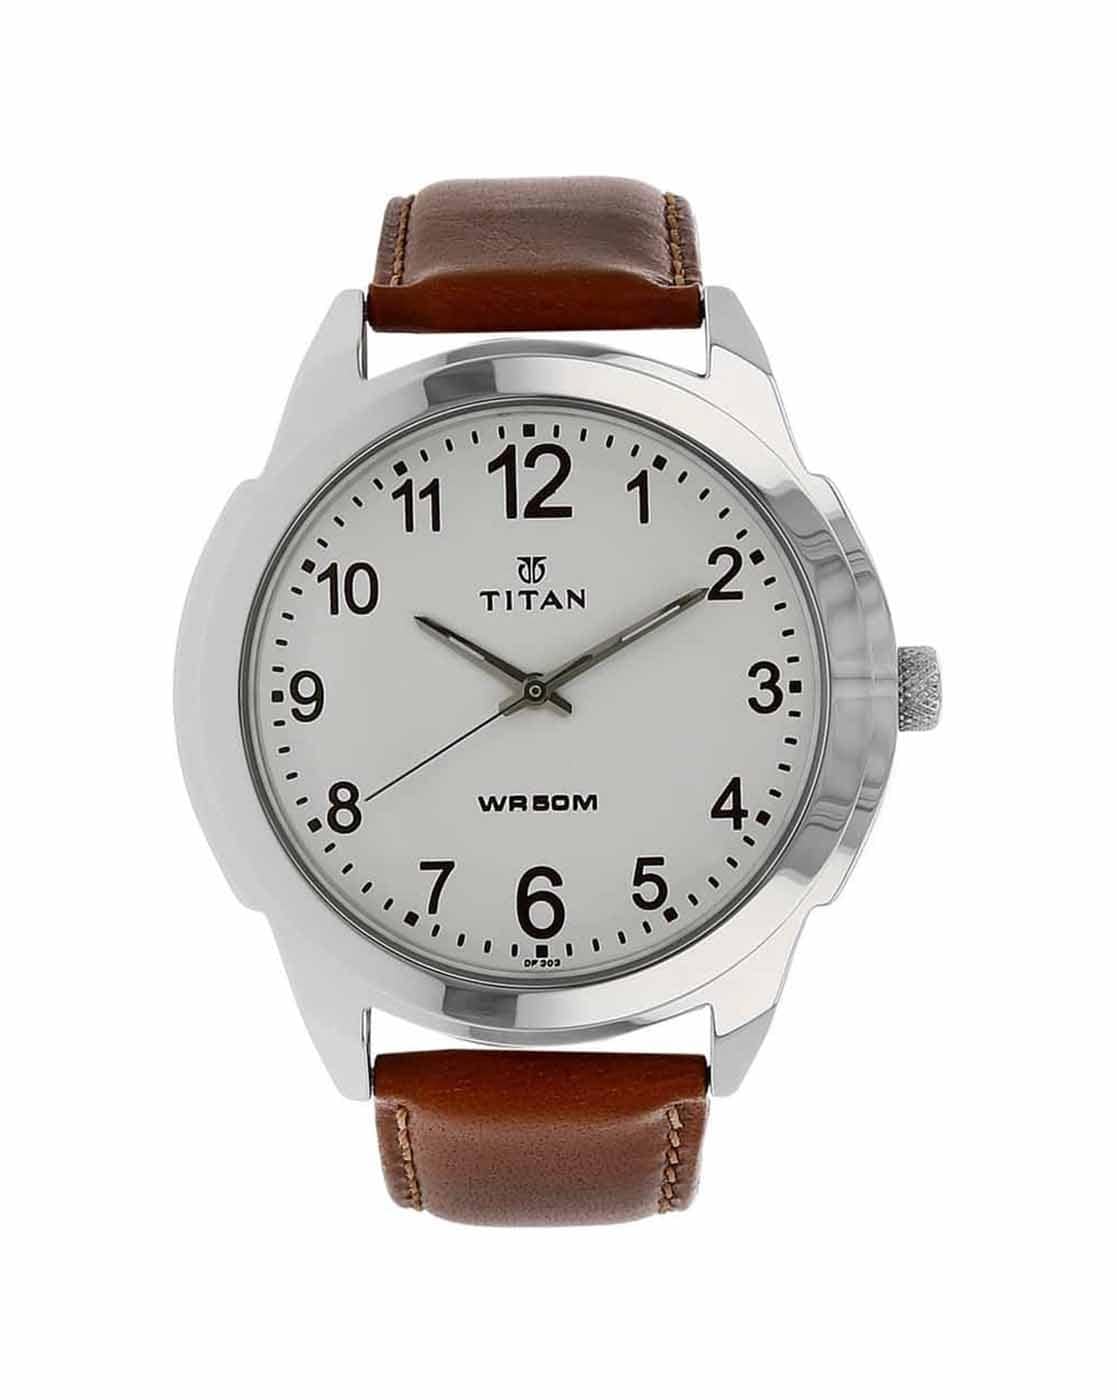 Titan Neo Men's Designer Watch - Quartz, Water Resistant, Brown Leather  Strap - Walmart.com